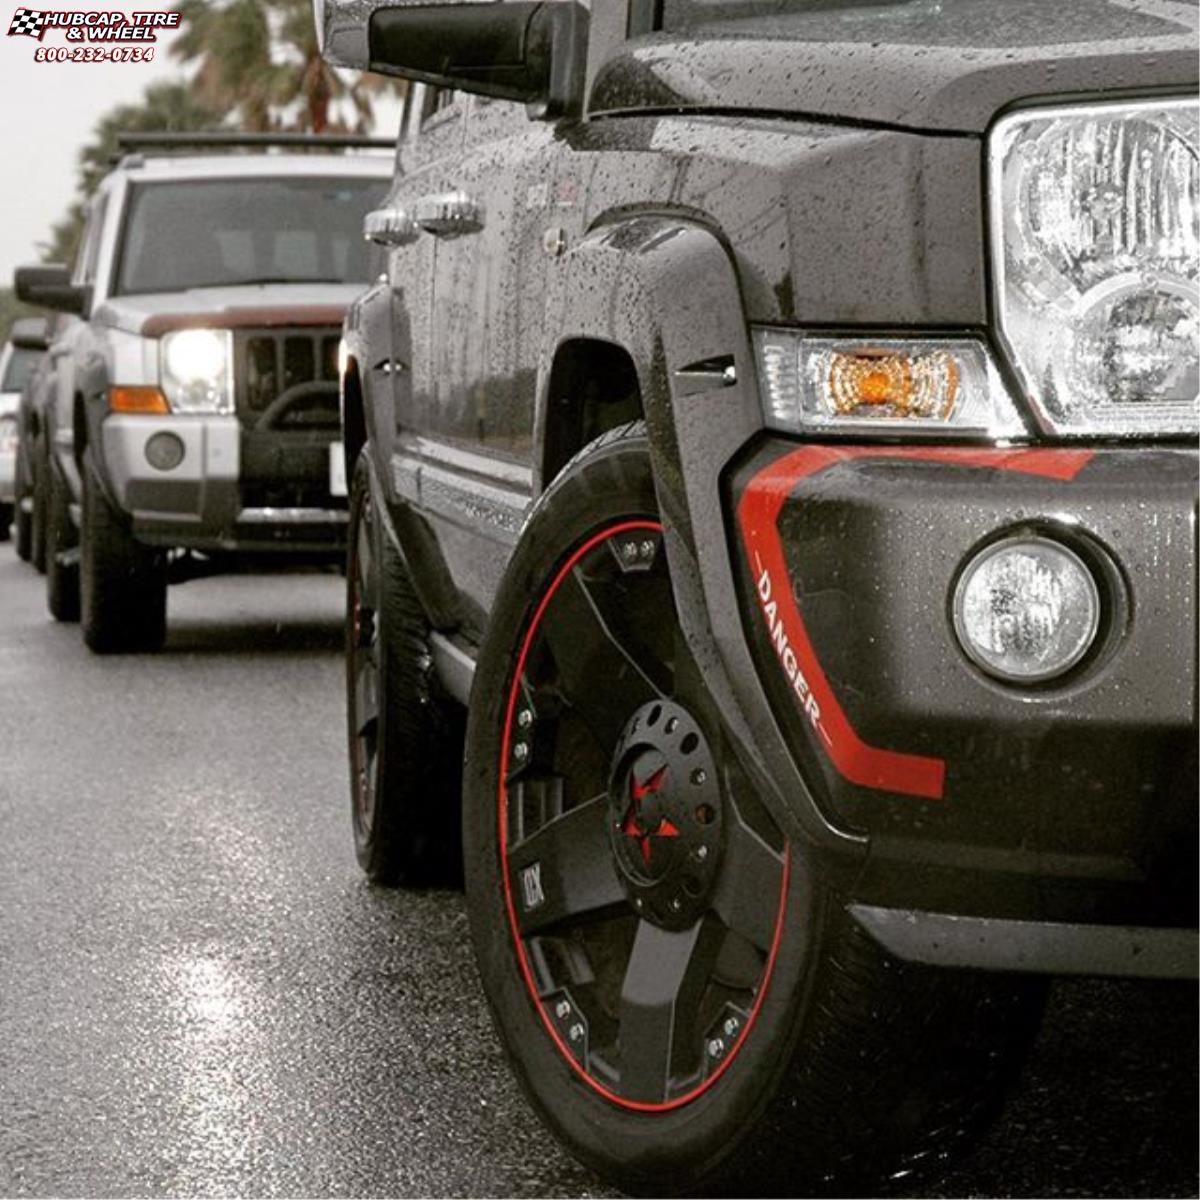 vehicle gallery/jeep cherokee xd series xd775 rockstar x  Matte Black wheels and rims